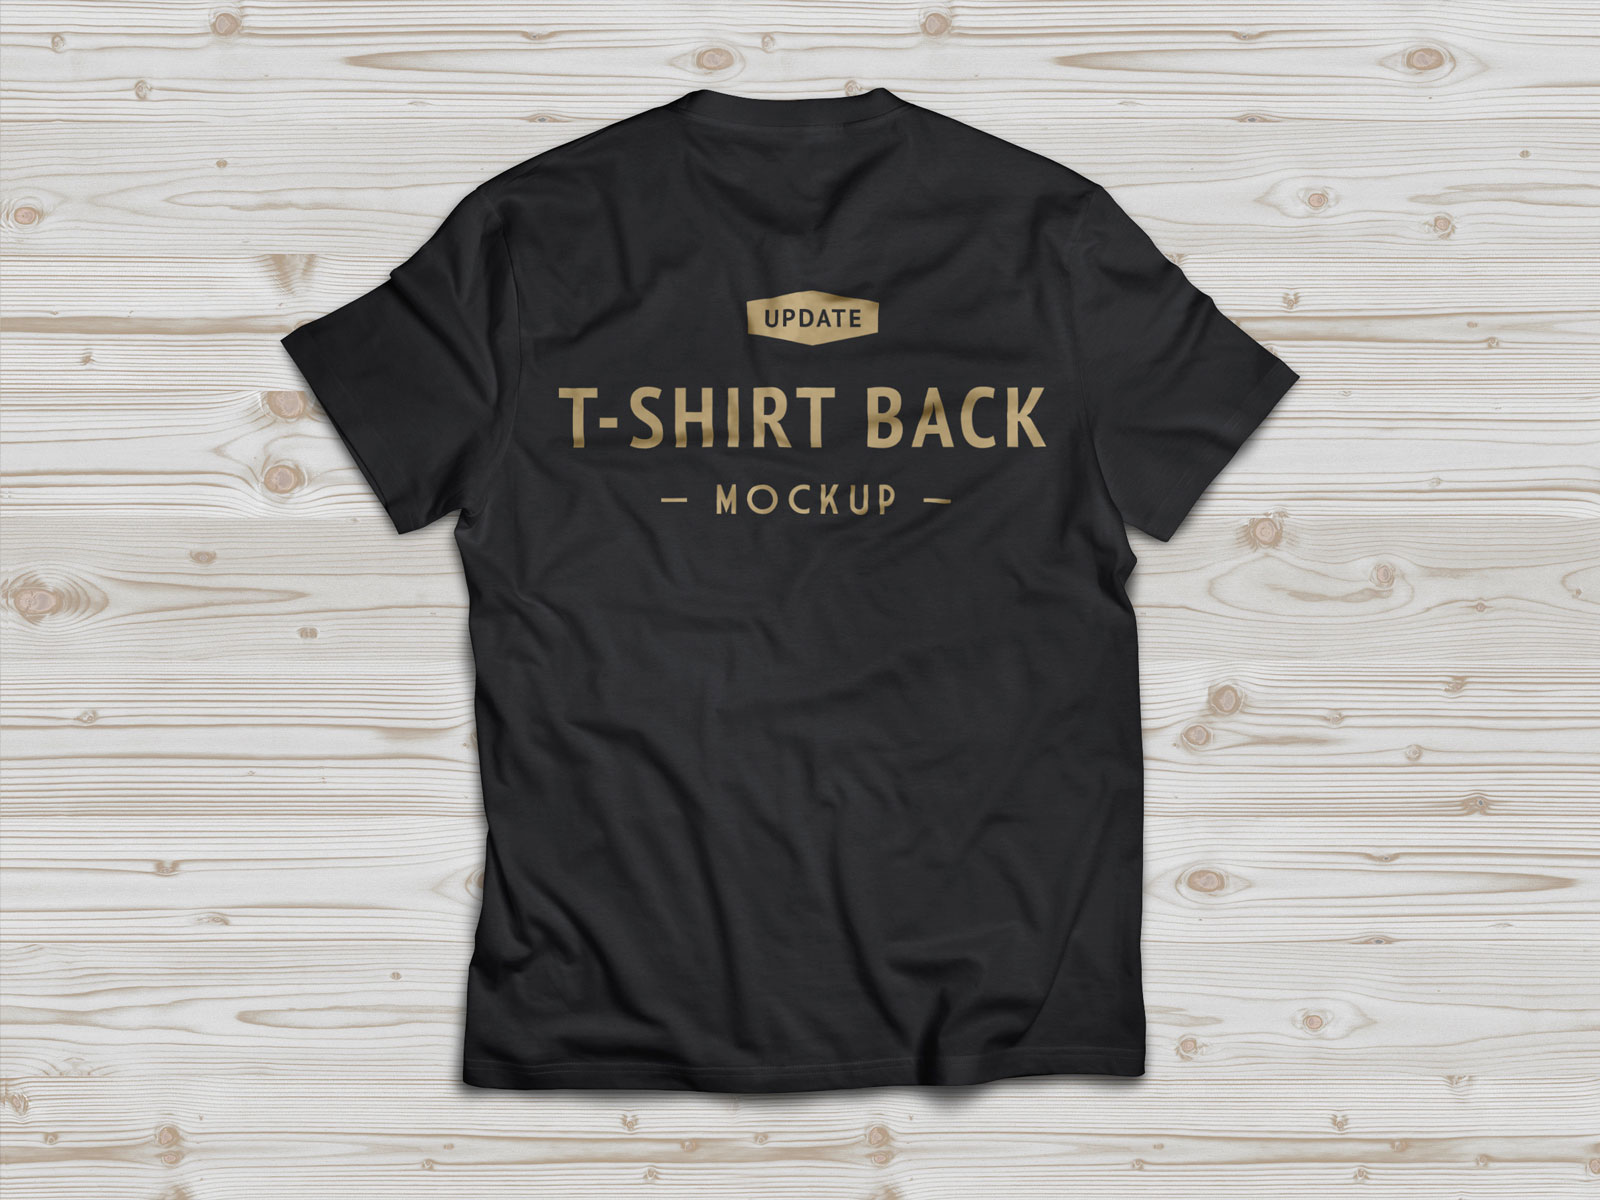 Free-Black-Half-Sleeves-T-shirt-Mockup-PSD-Backside